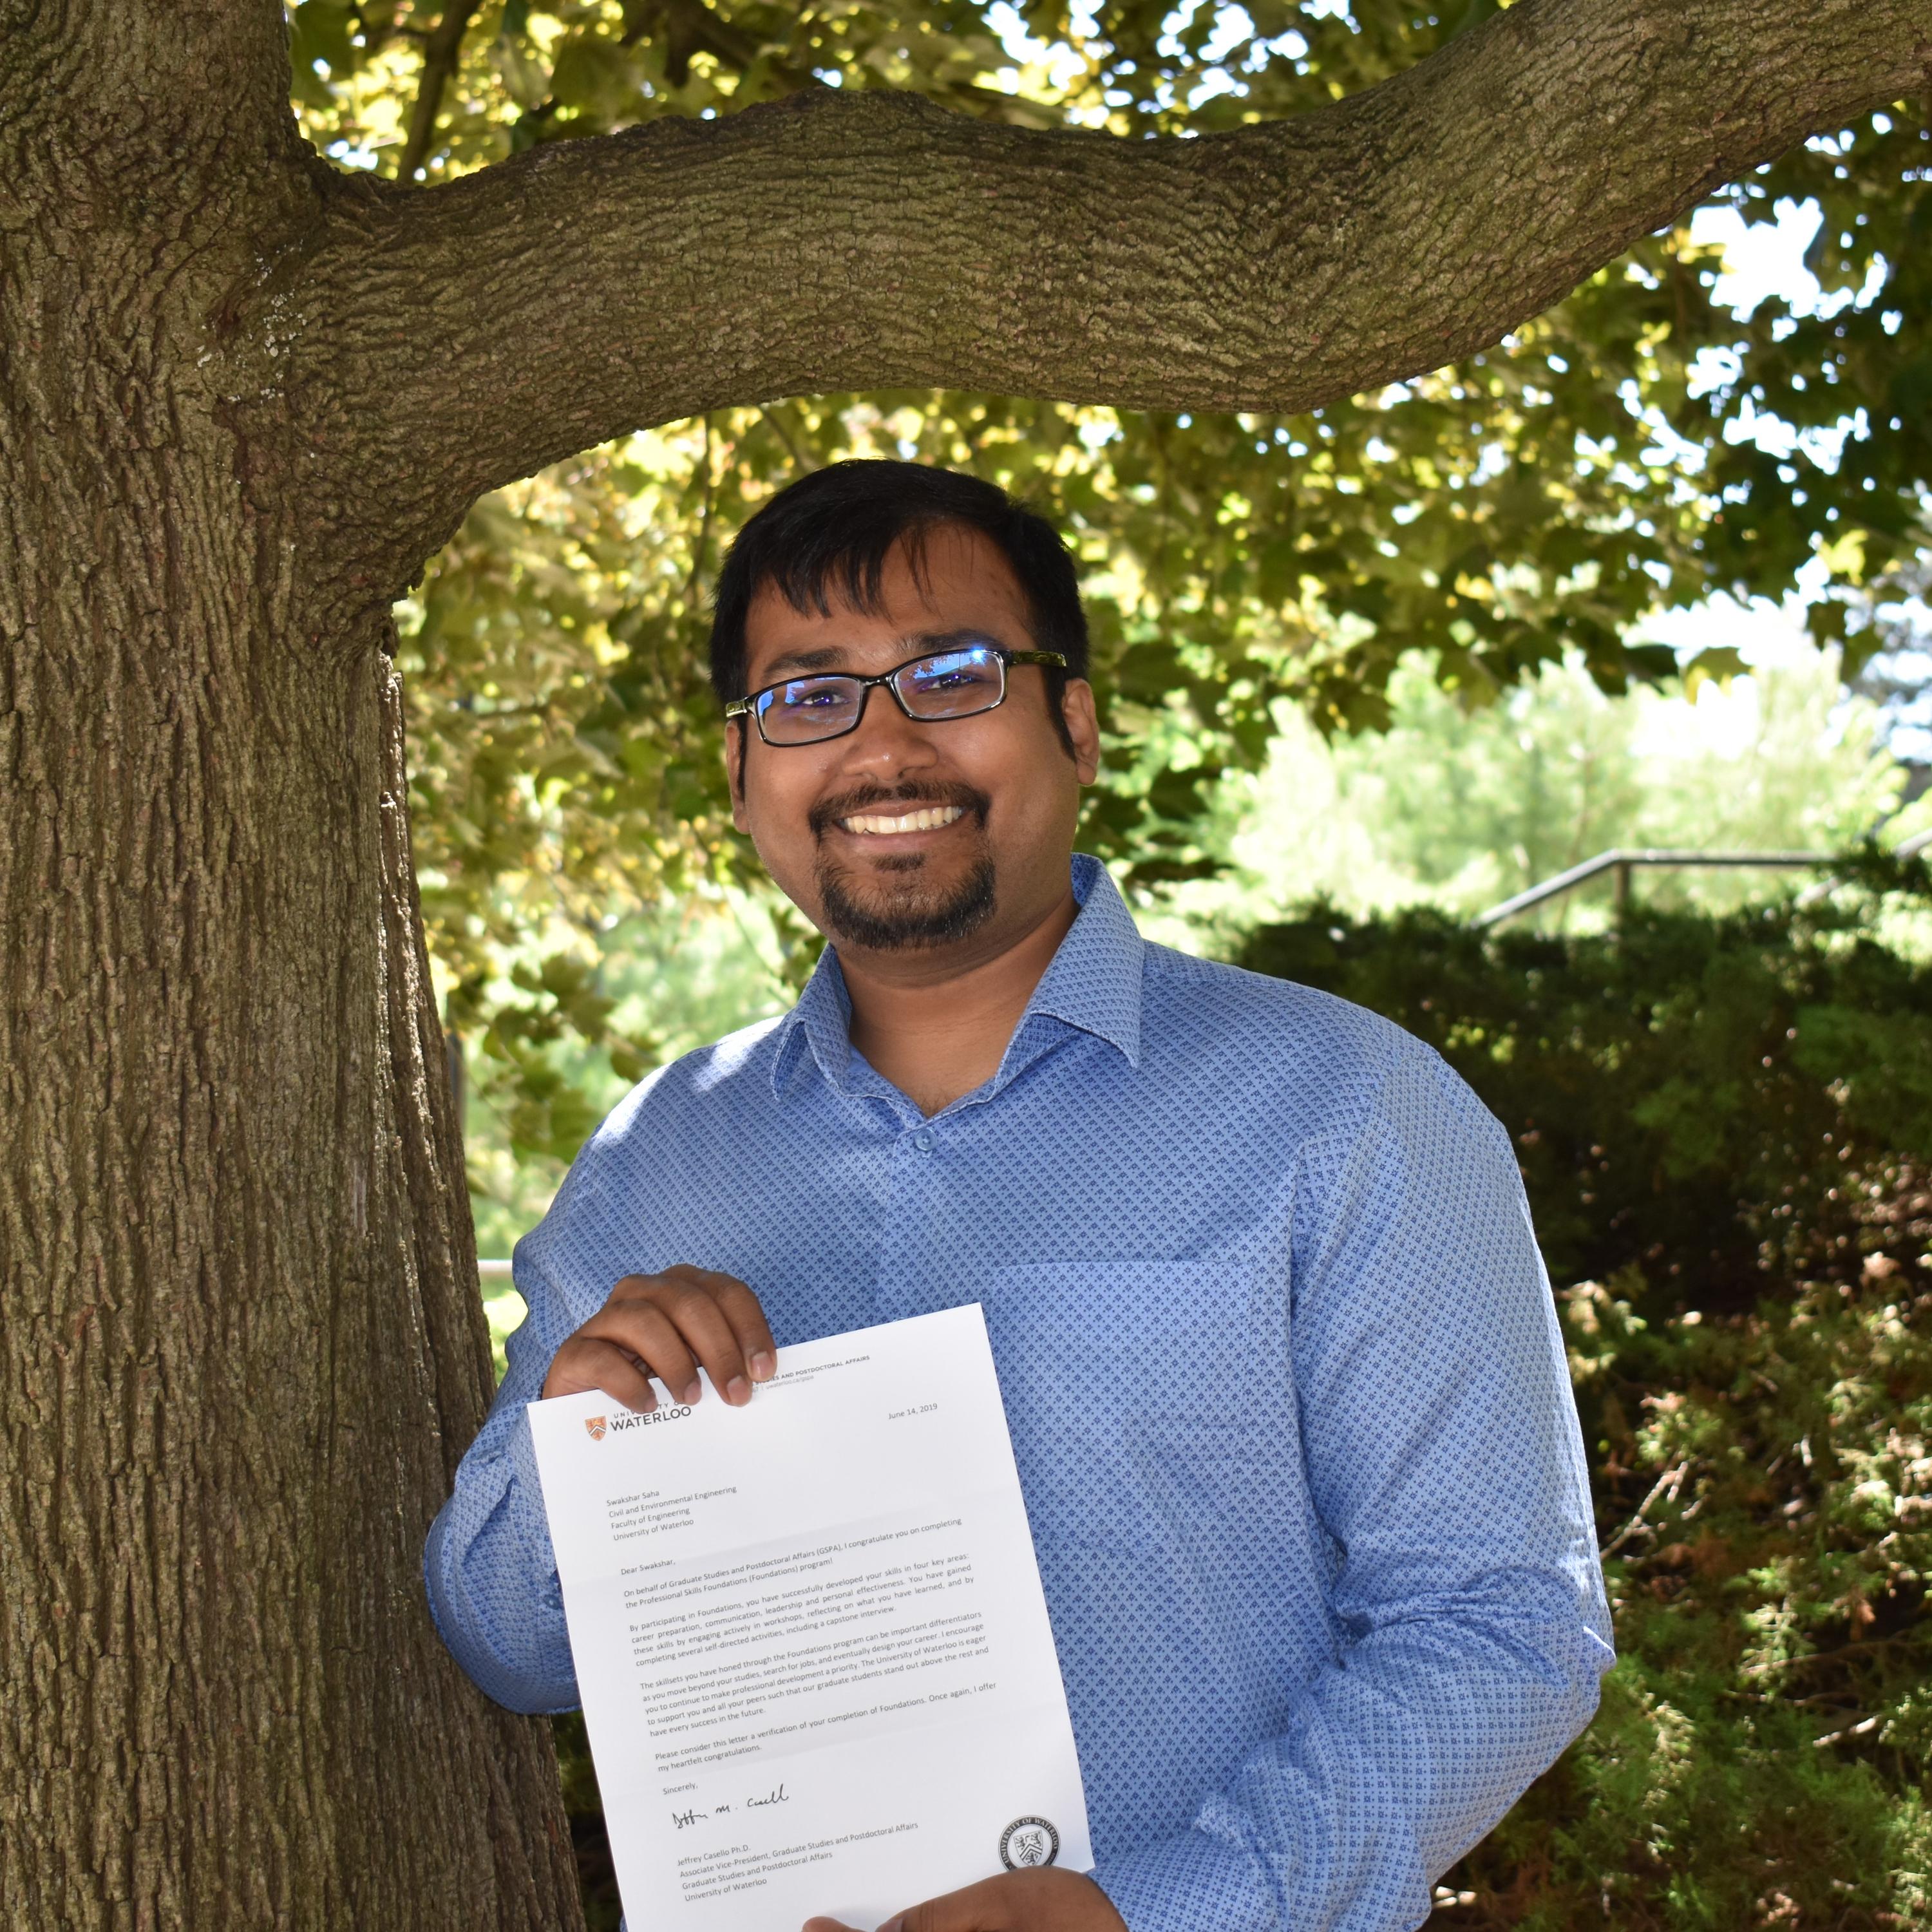 Swakshar Saha shows off his Foundations completion letter